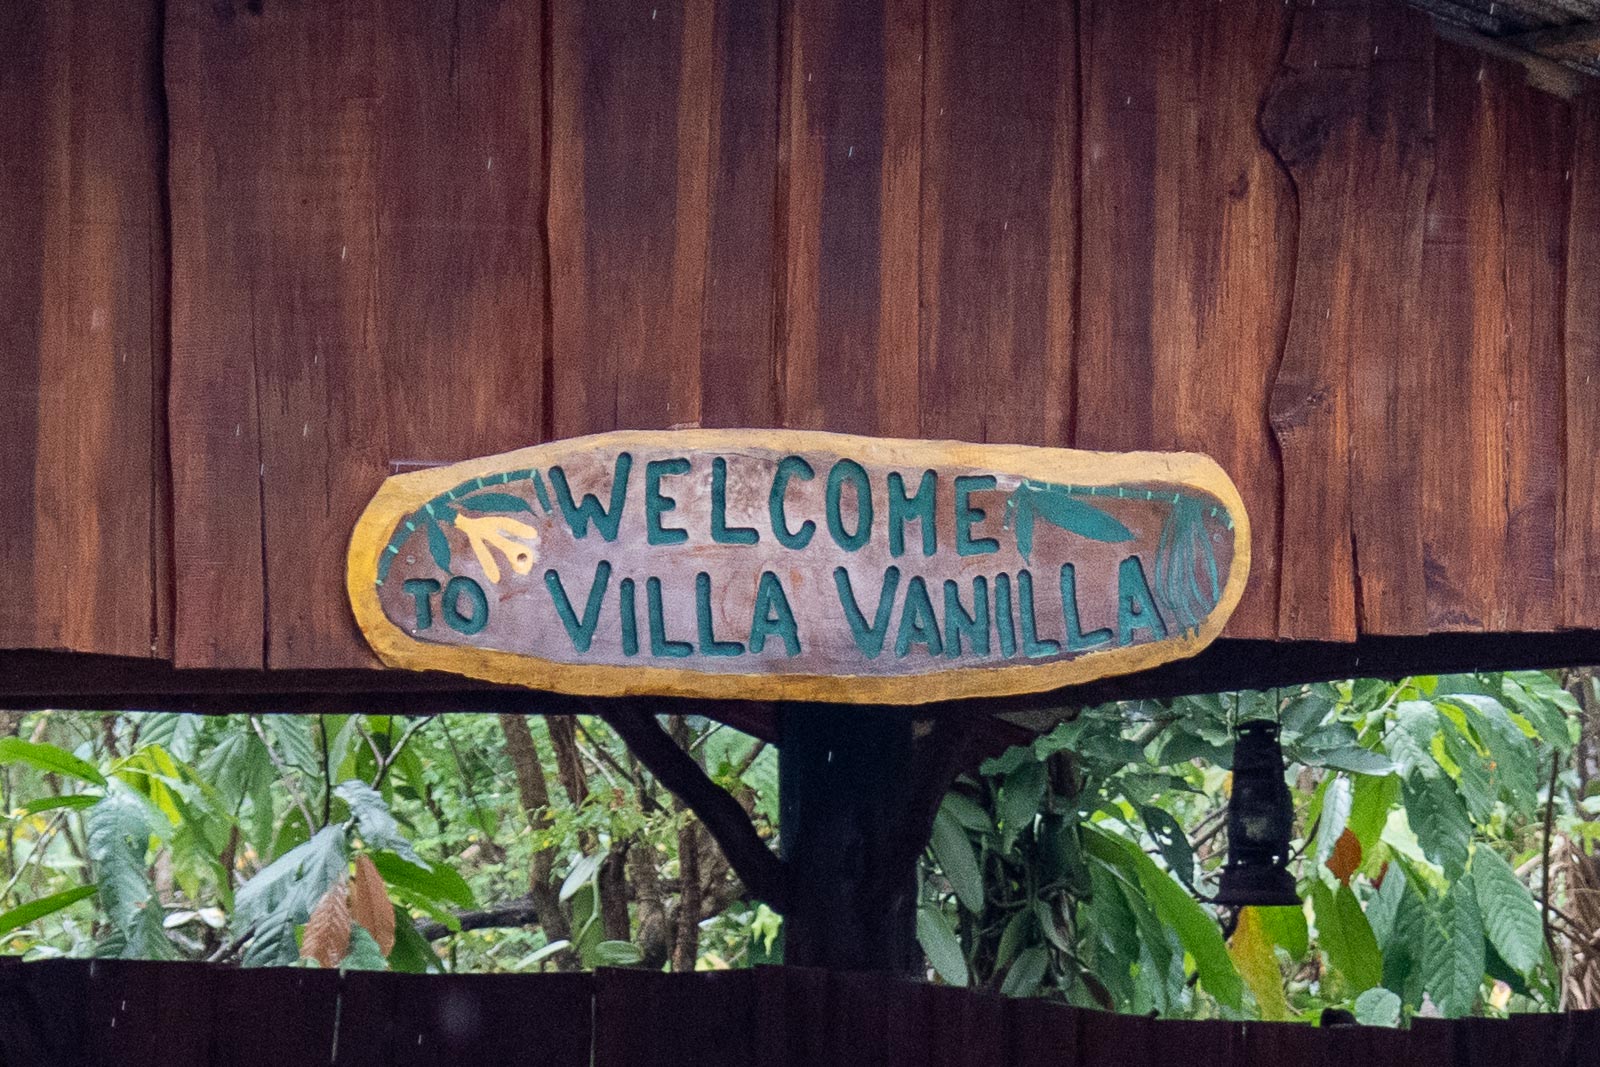 Welcome to Villa Vanilla